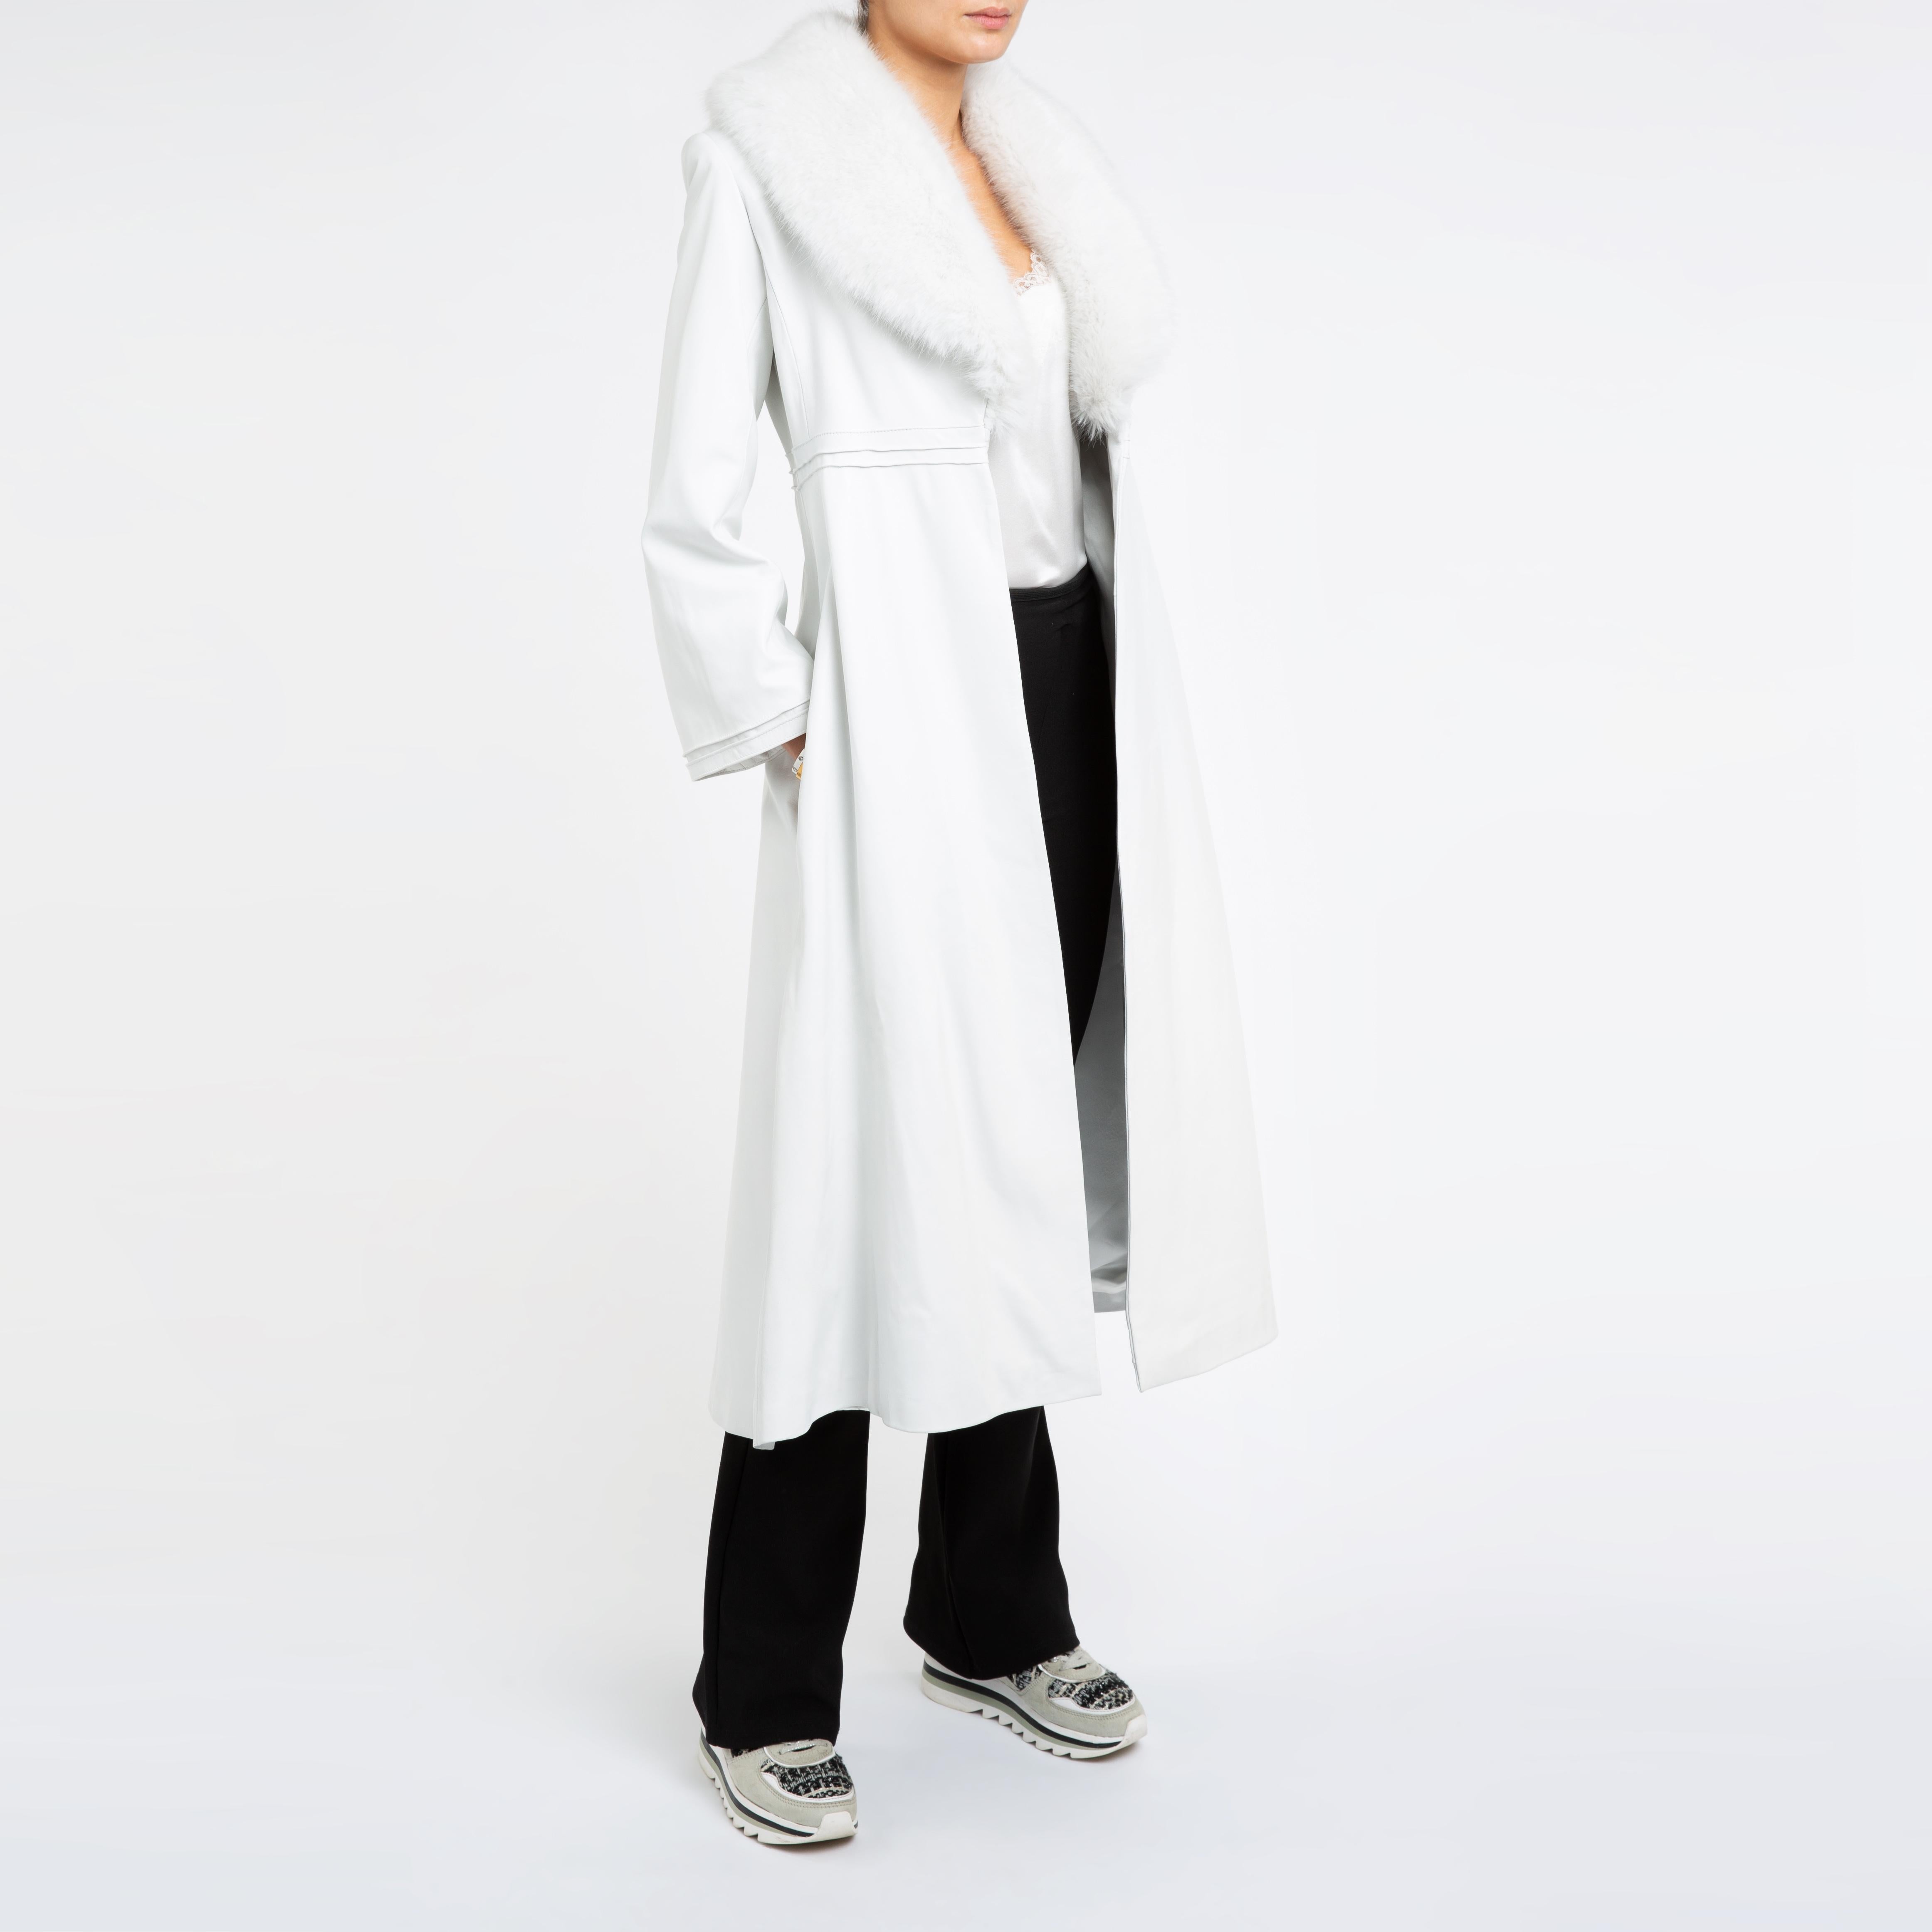 Verheyen London Edward Leather Coat in White with Faux Fur - Size uk 8  For Sale 3